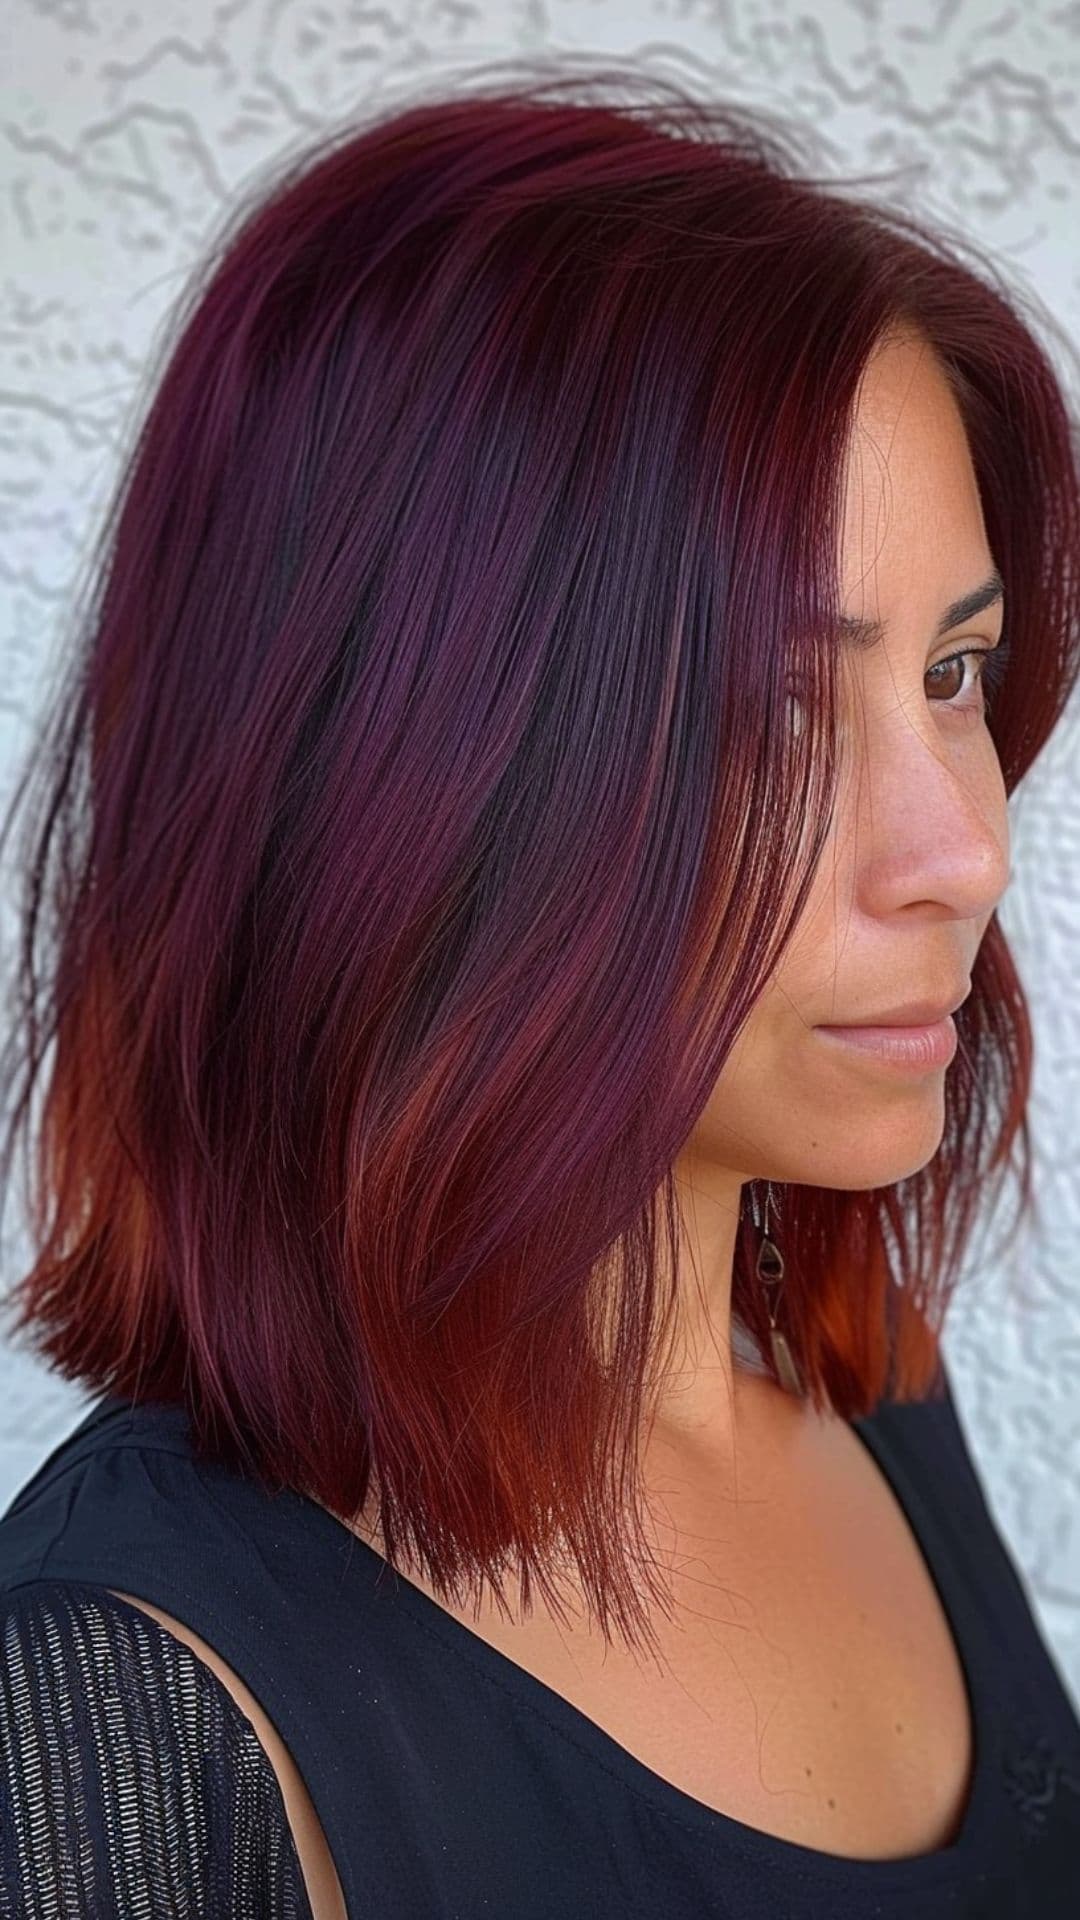 A woman modelling a deep burgundy hair.